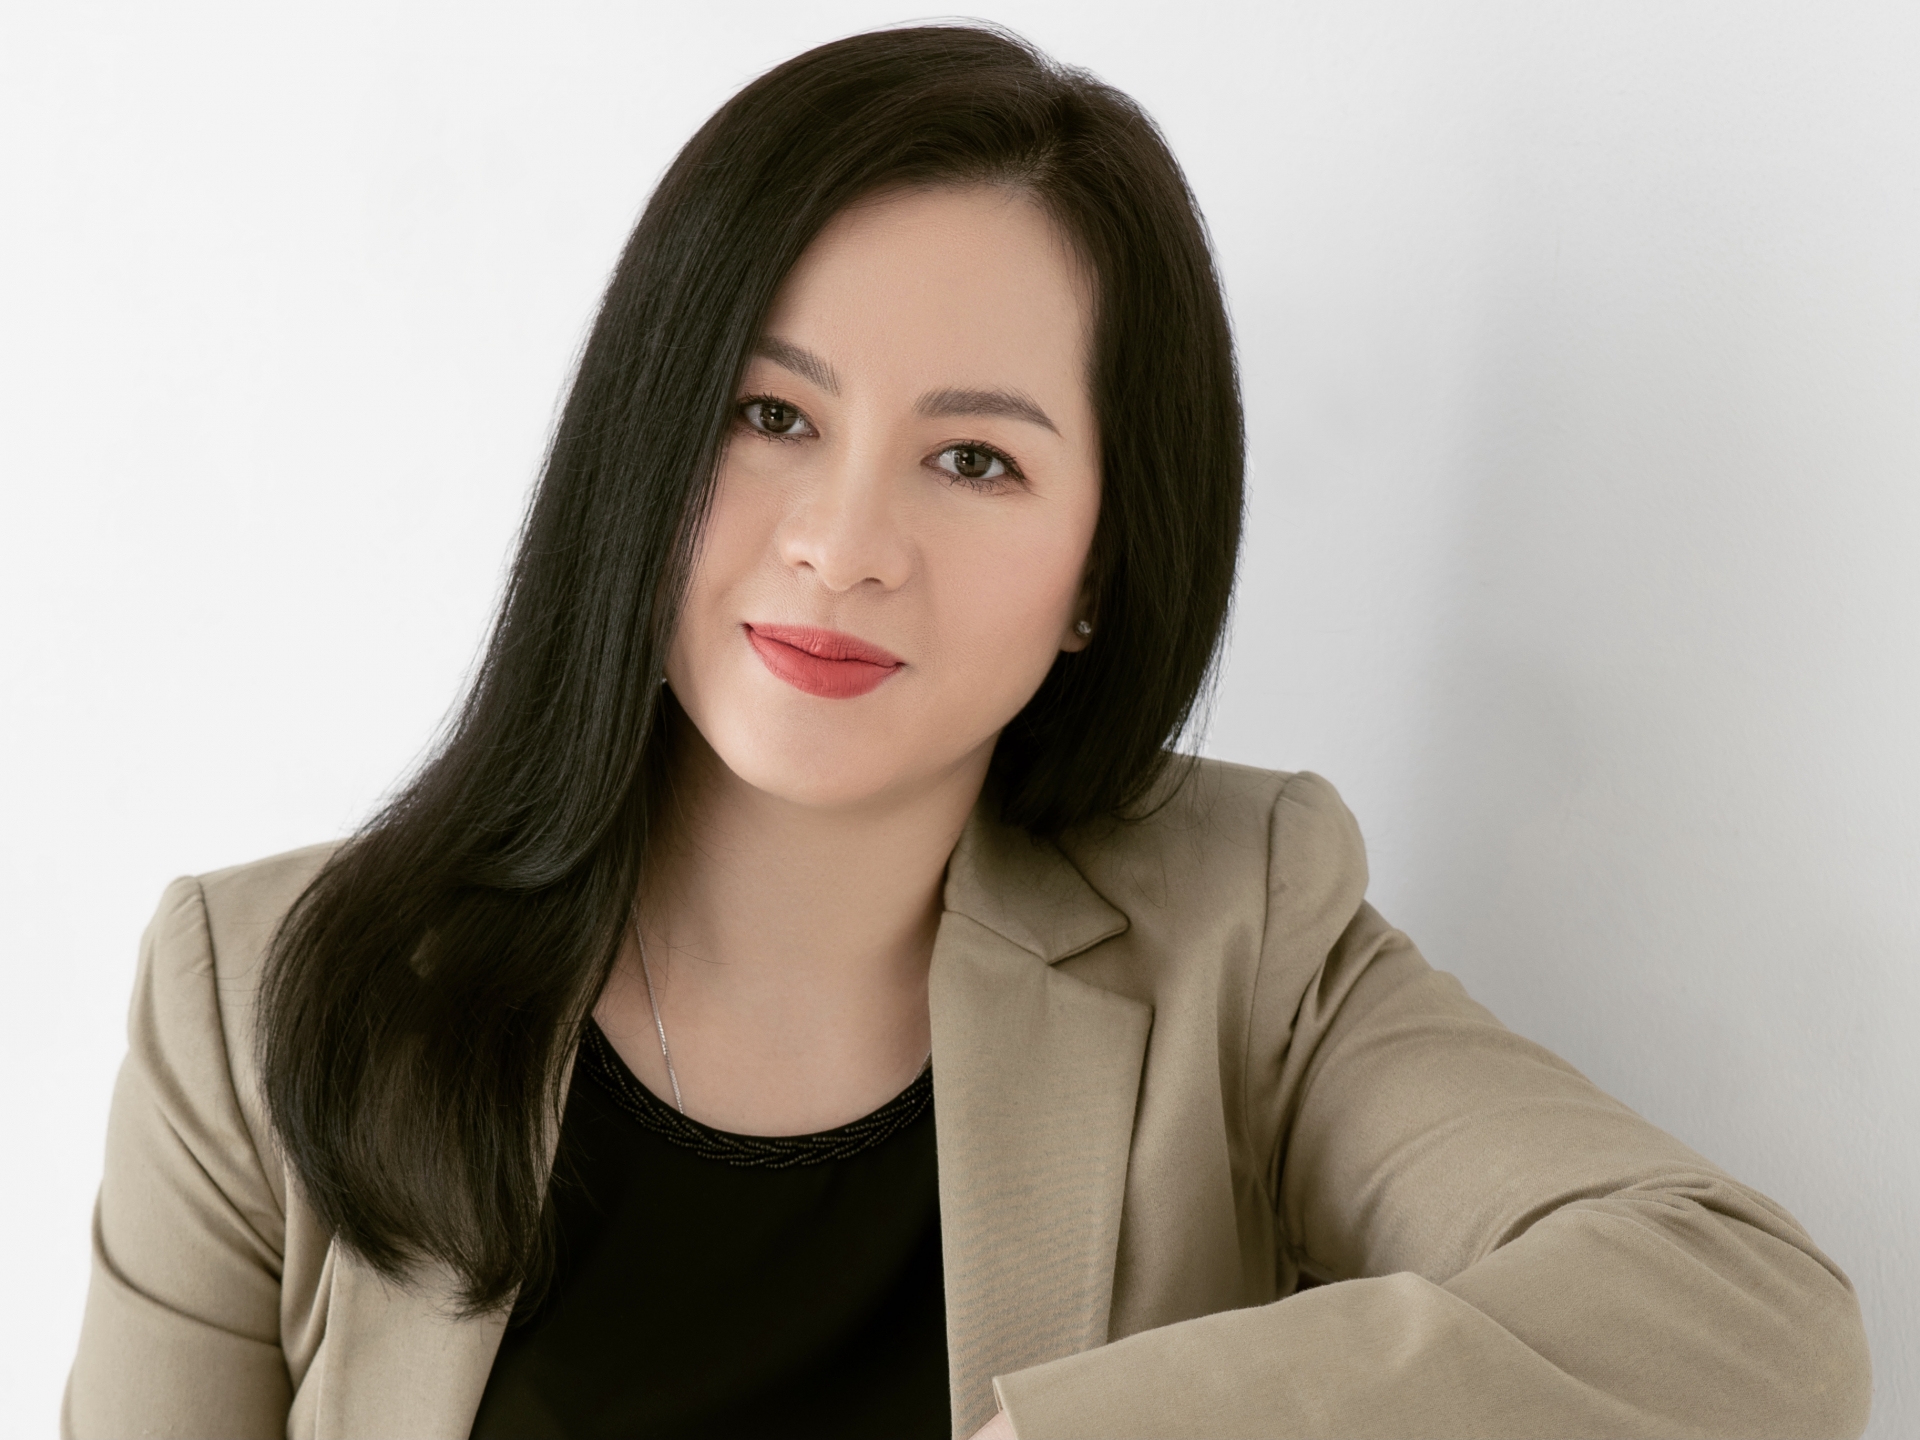 Schneider Electric IT appoints first Vietnamese female director for Vietnam